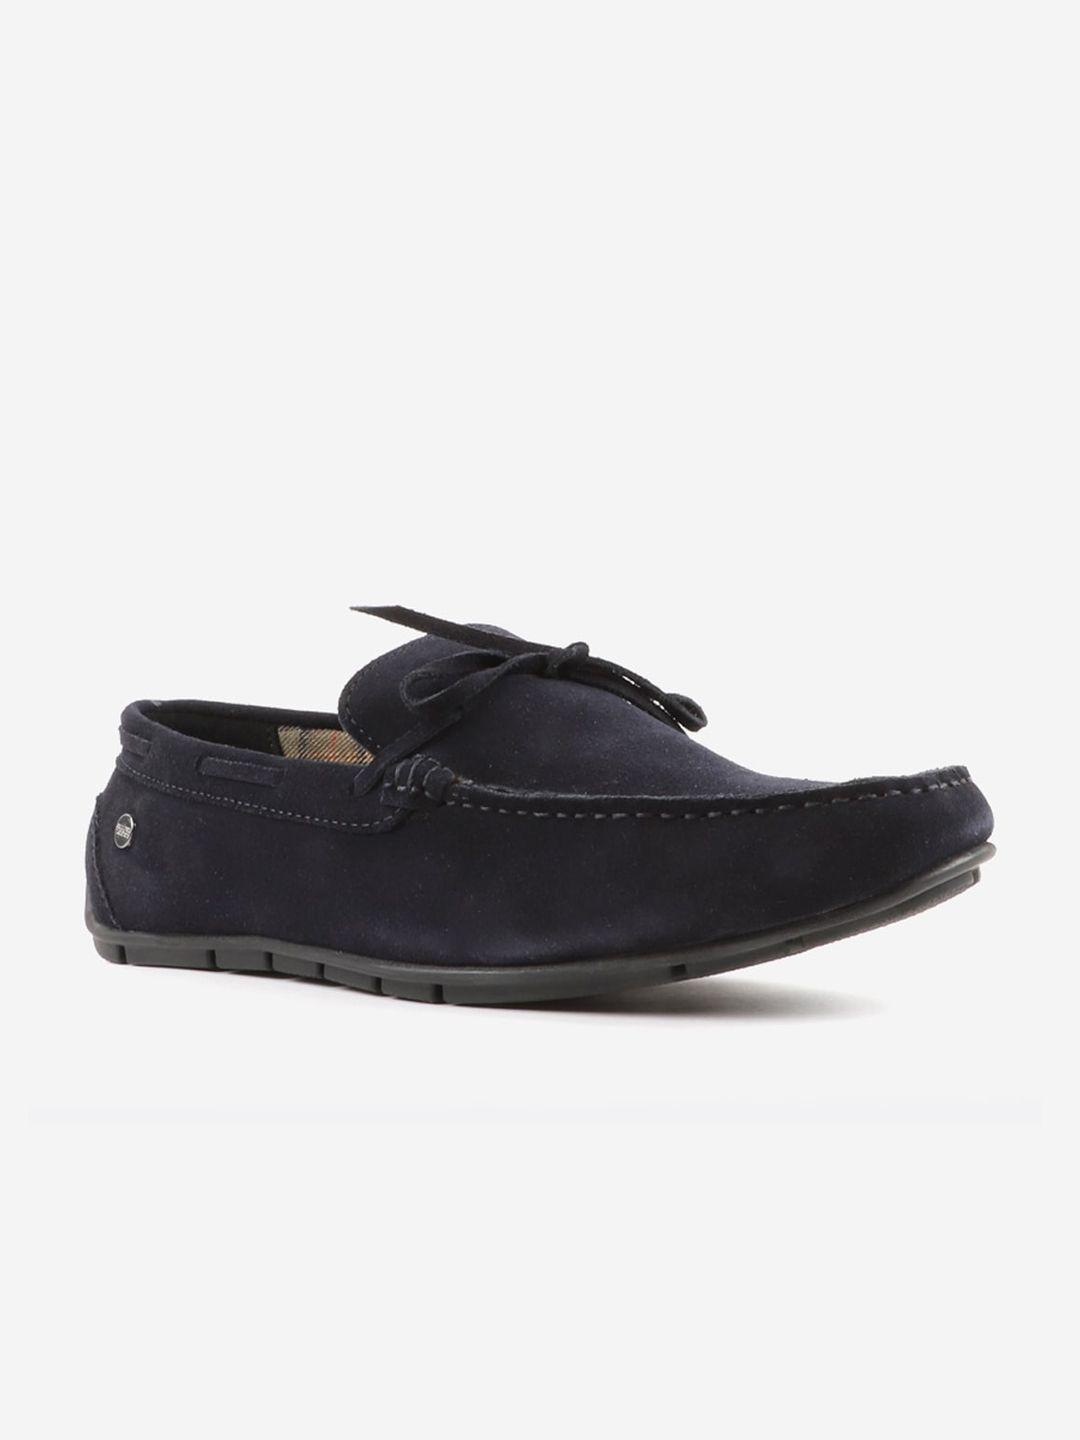 carlton-london-men-blue-leather-loafer-shoes